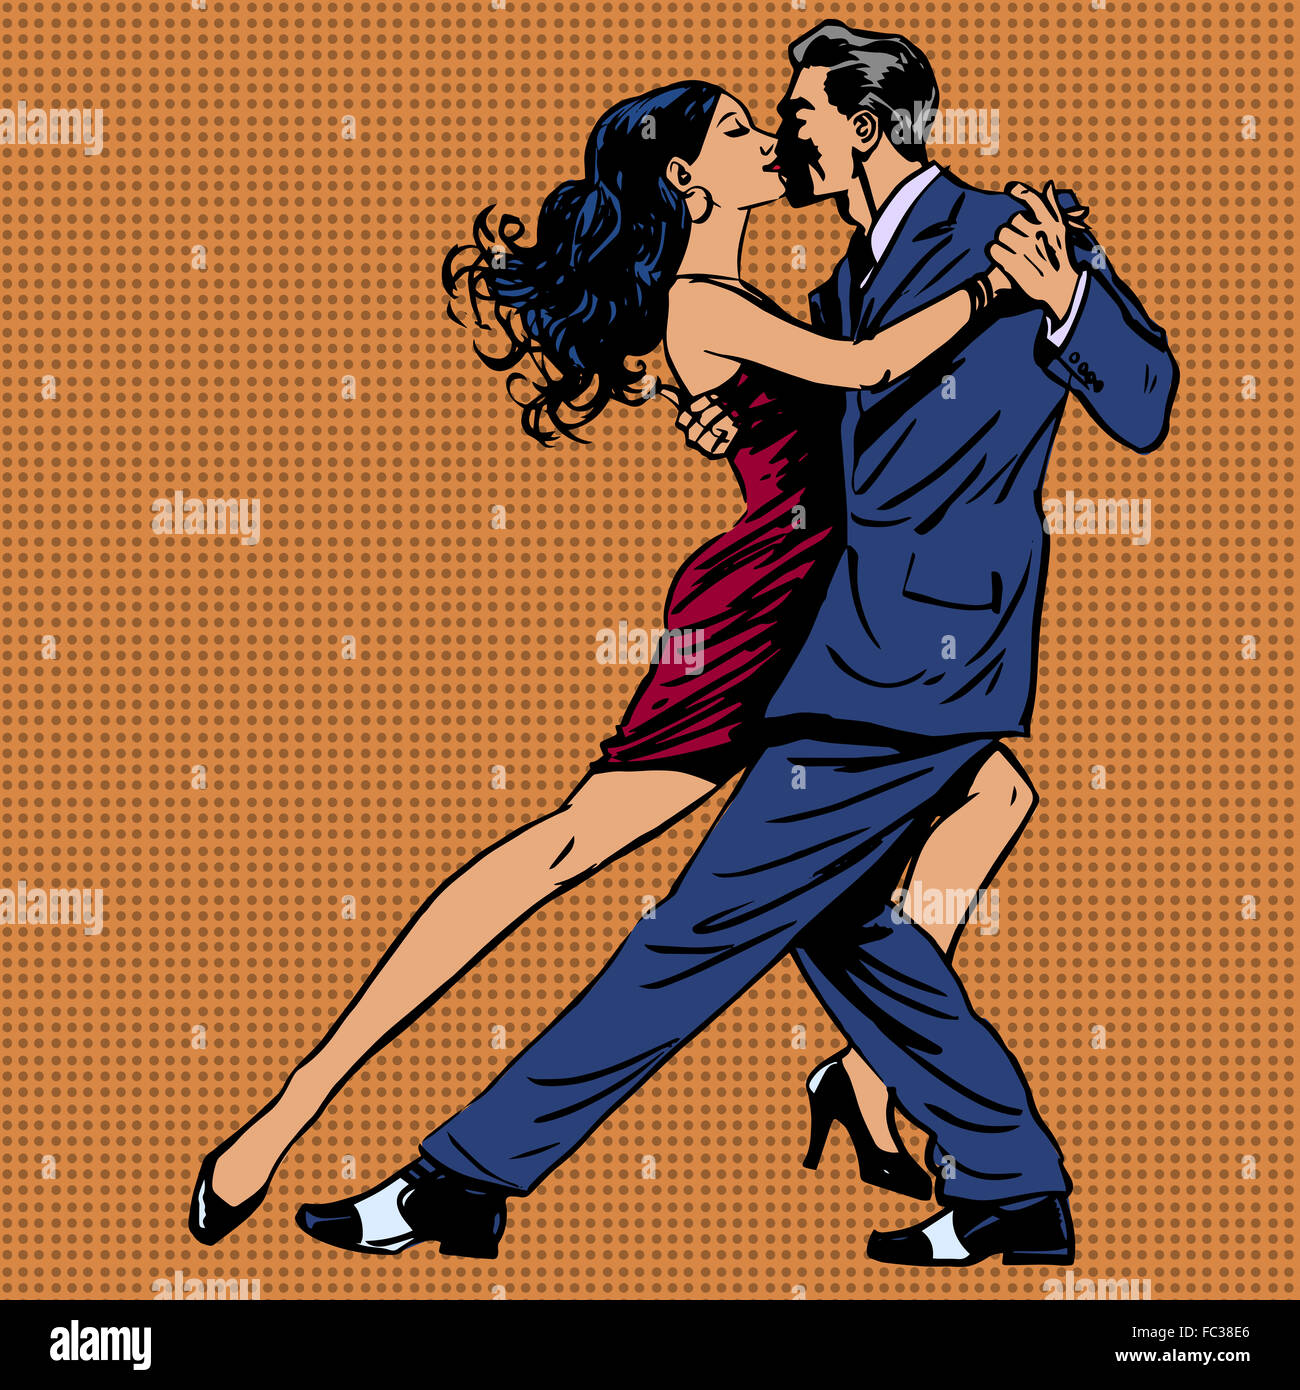 man and woman kiss dance tango pop art Stock Photo - Alamy